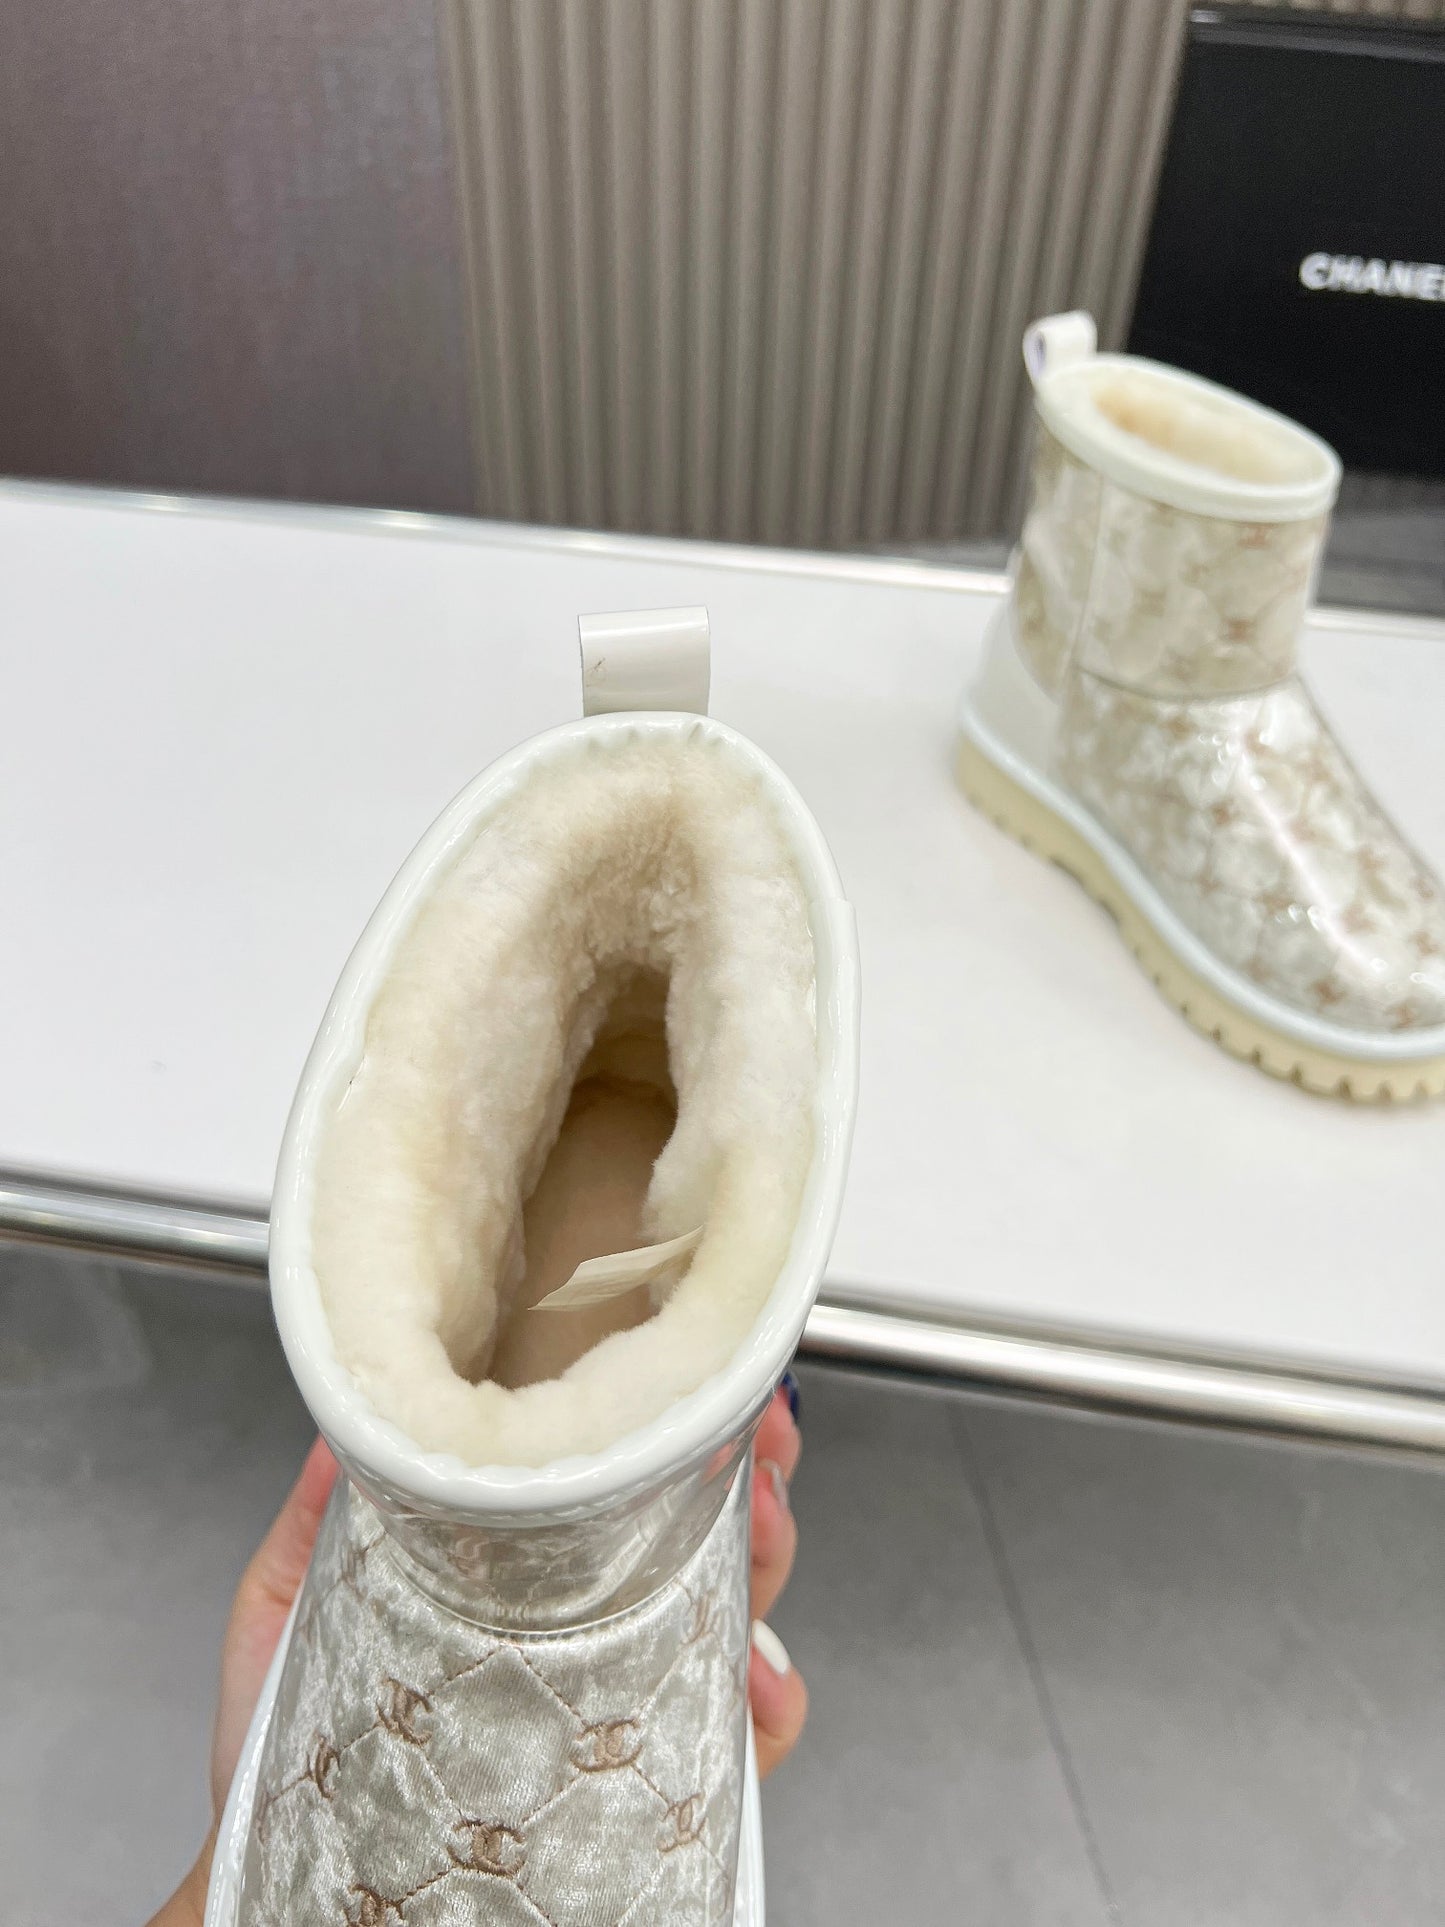 Ugg Boots Chanel Collab Creme